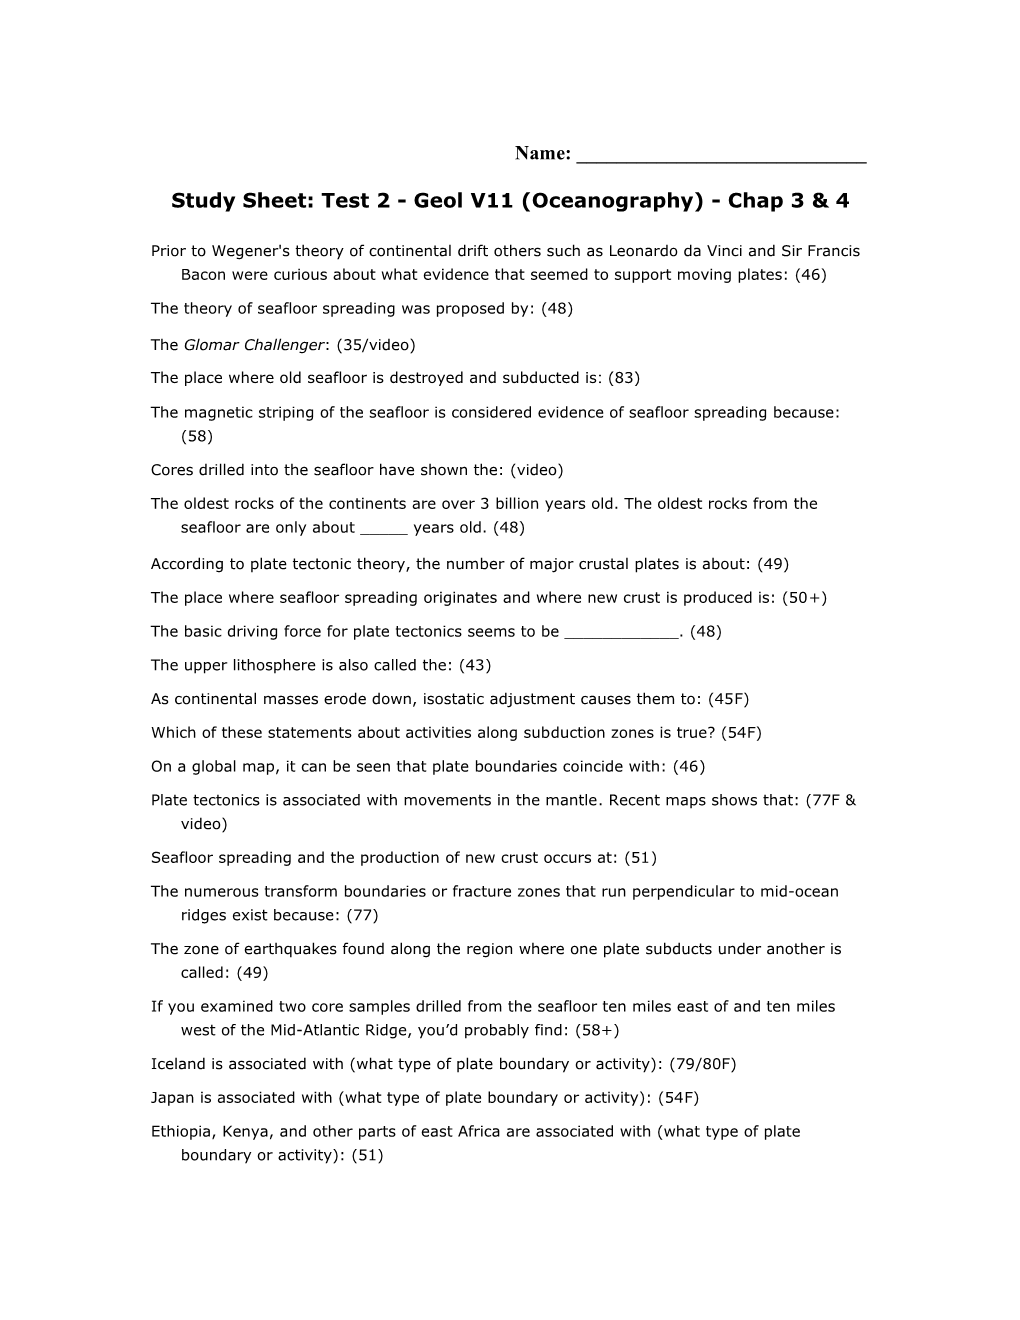 Study Sheet: Test 2 - Geol V11 (Oceanography) - Chap 3 & 4